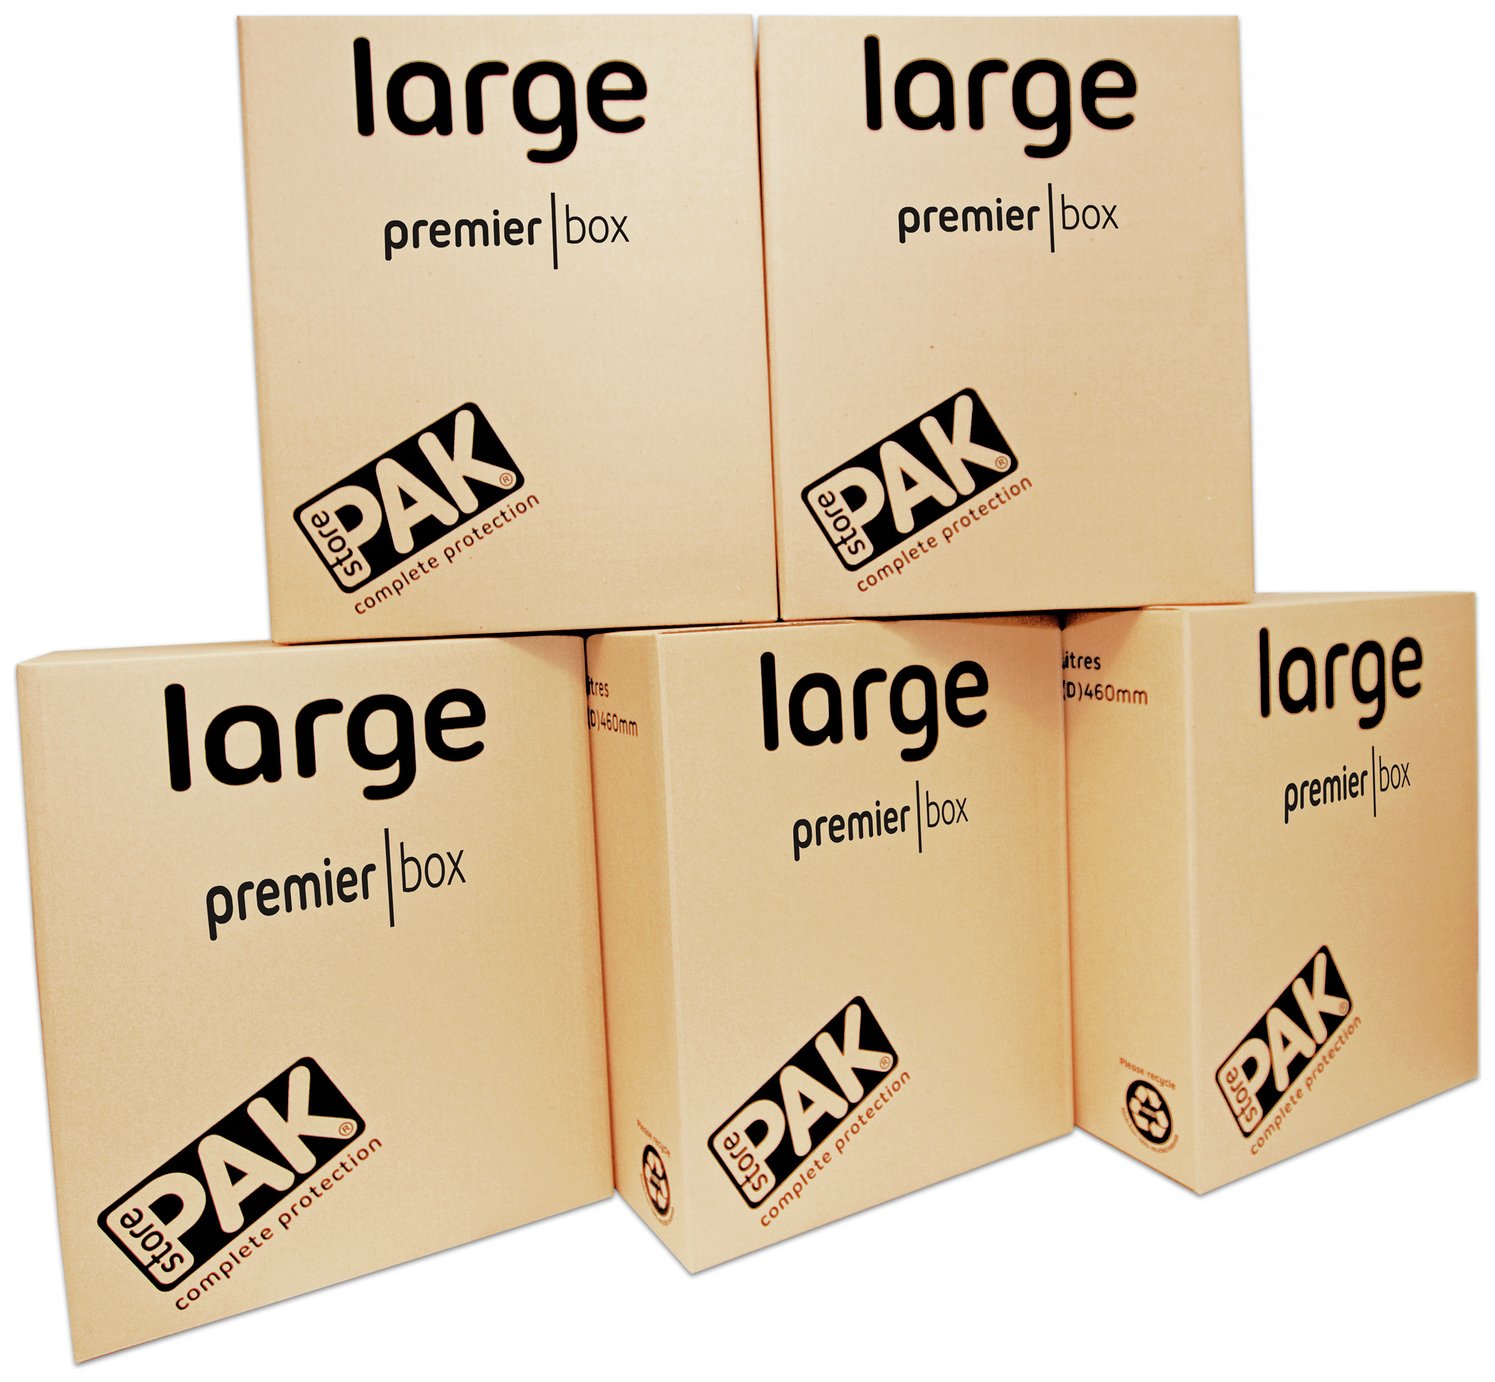 StorePAK Heavy Duty Large Cardboard Boxes - Set of 5